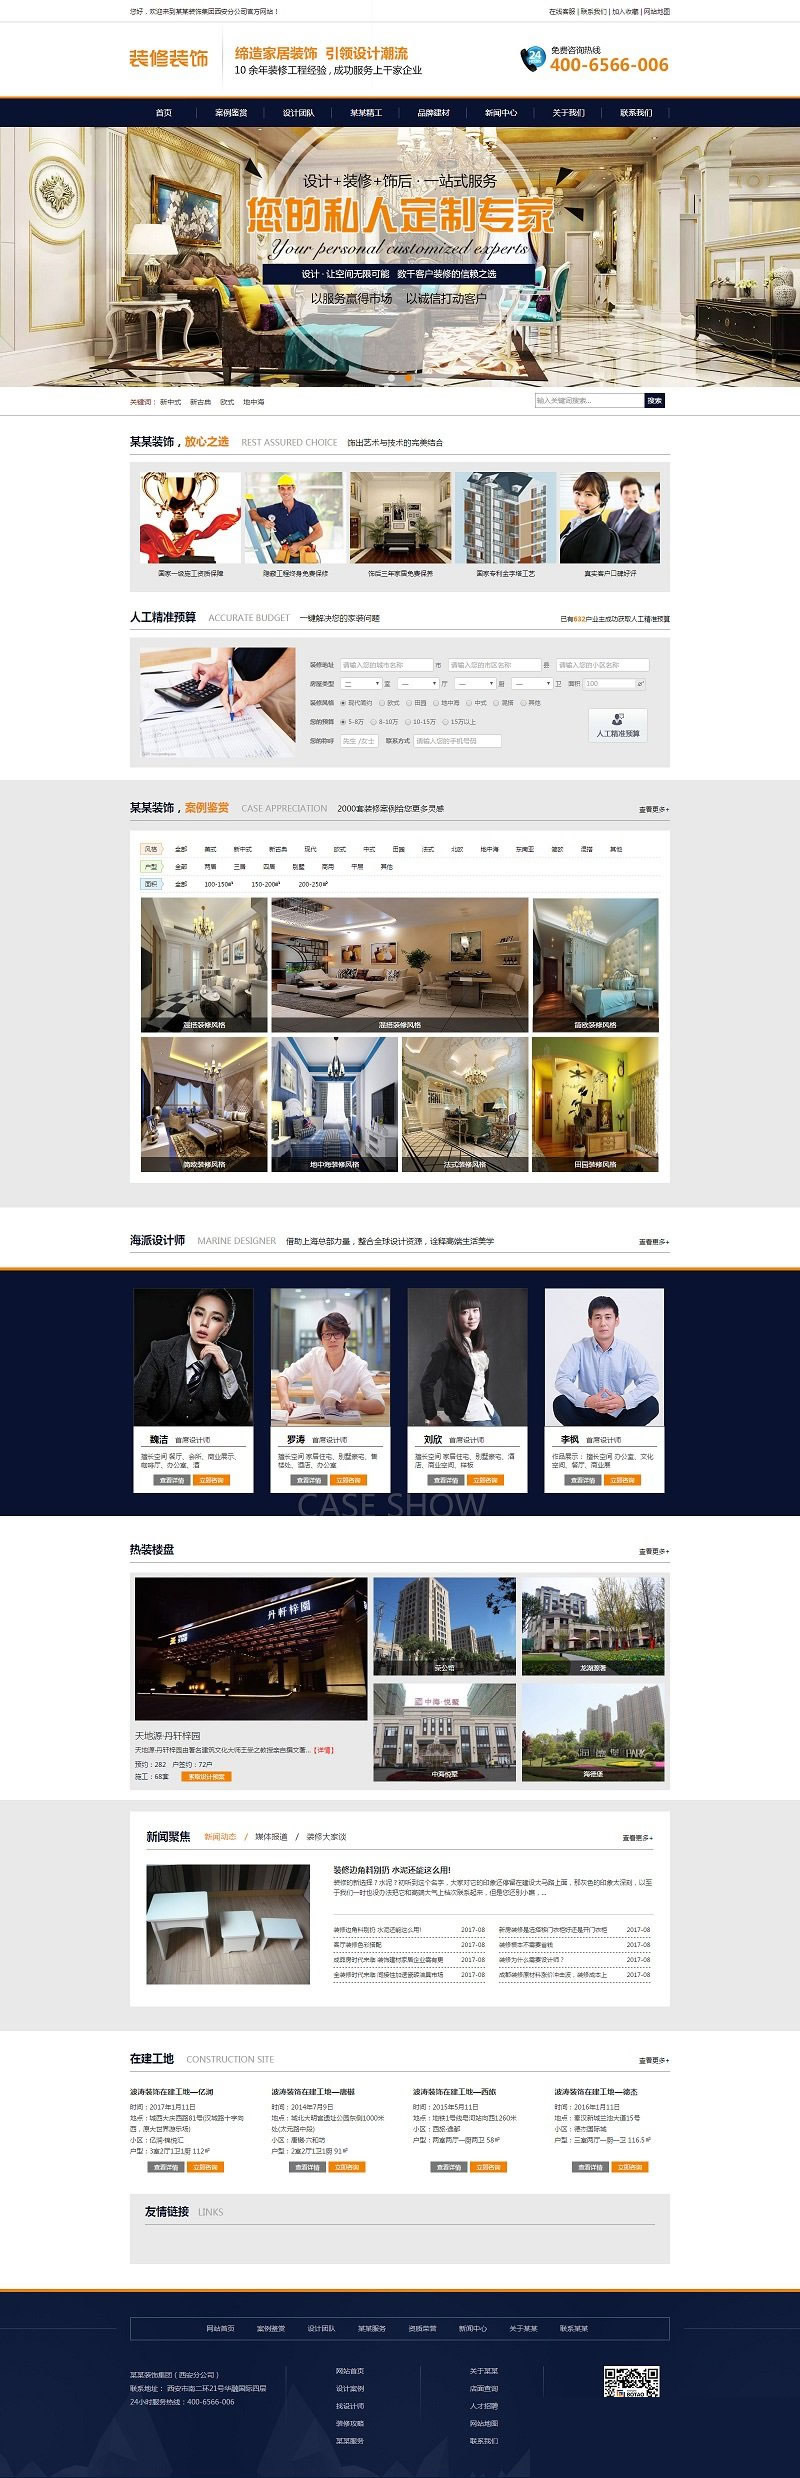 M063 家居装饰装修工程公司网站源码 织梦dedecms模板